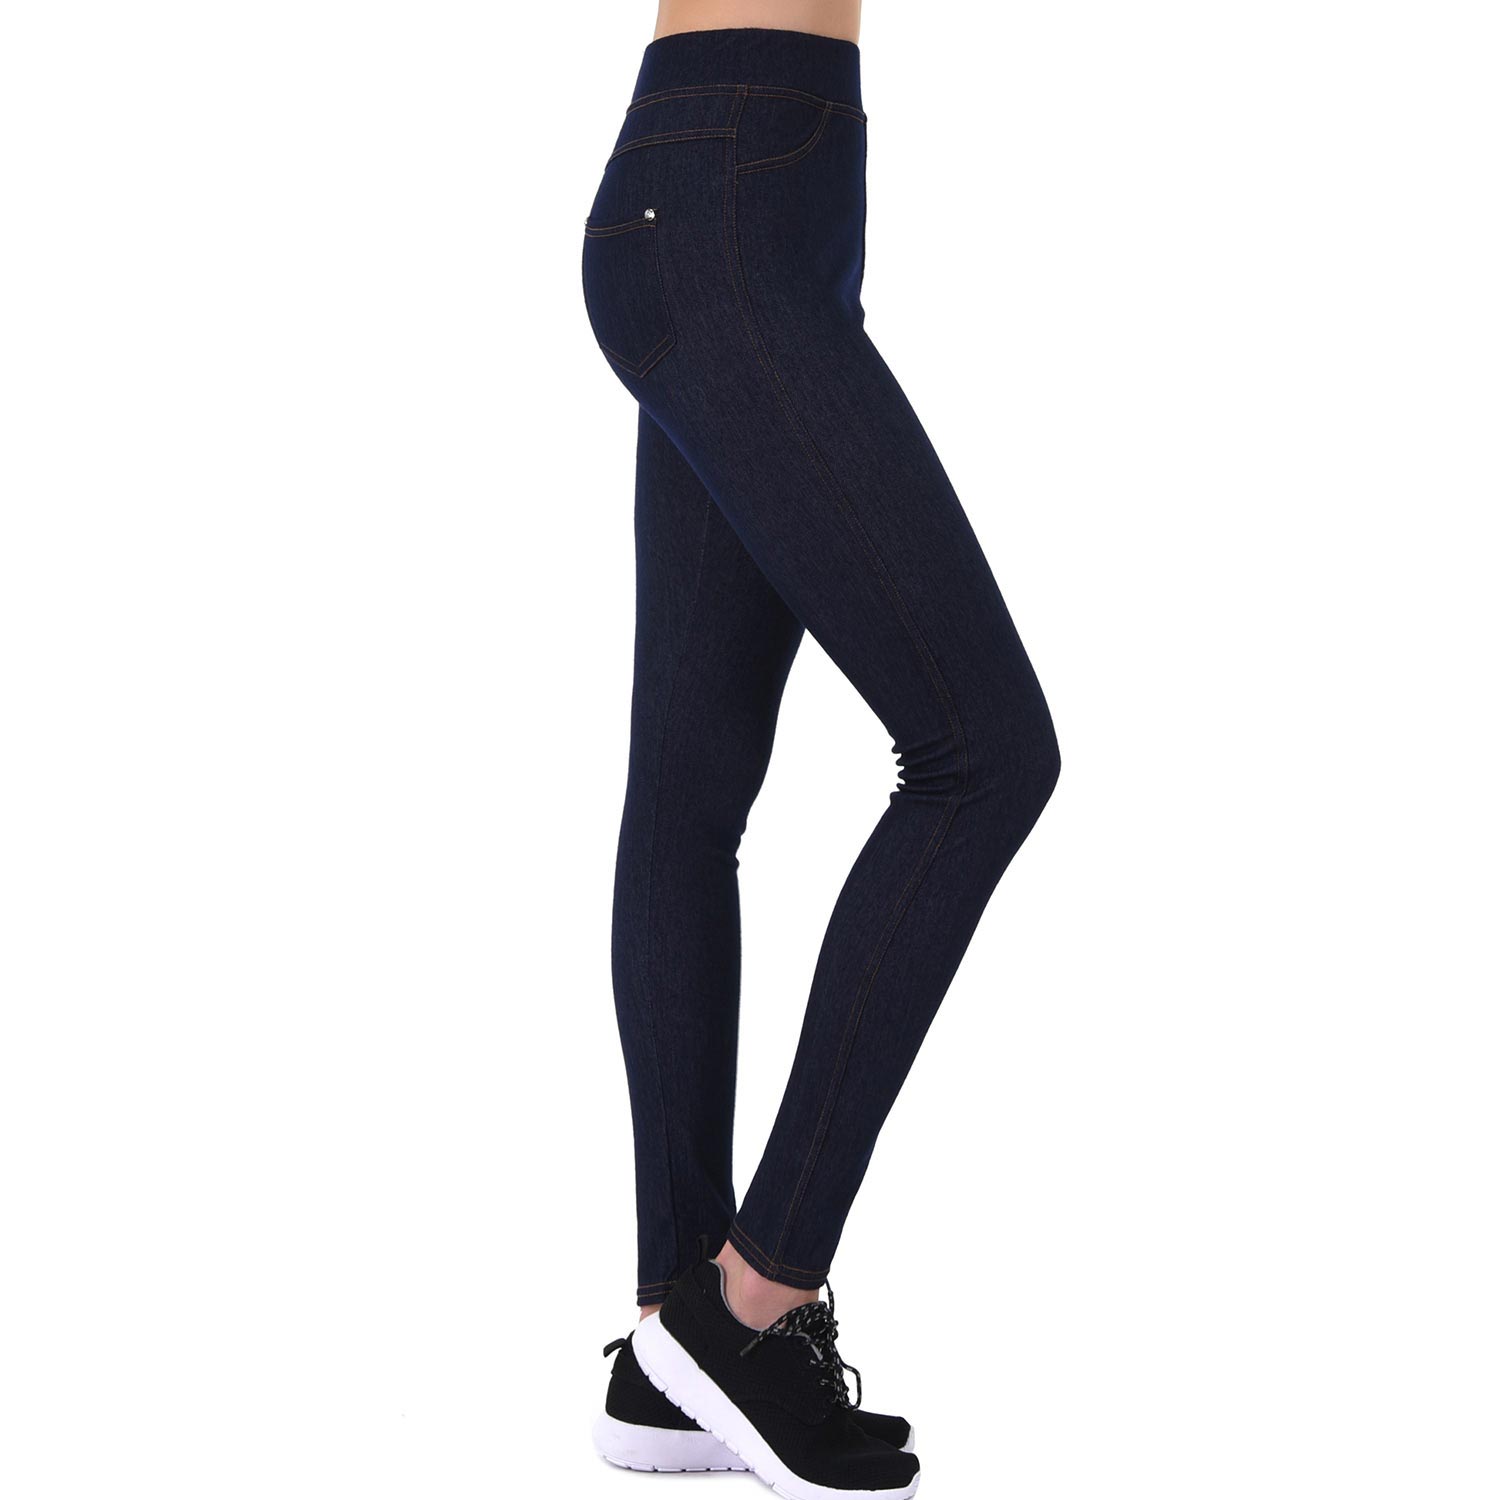 2 Pack Ladies Jeans Leggings W/ Back Pockets